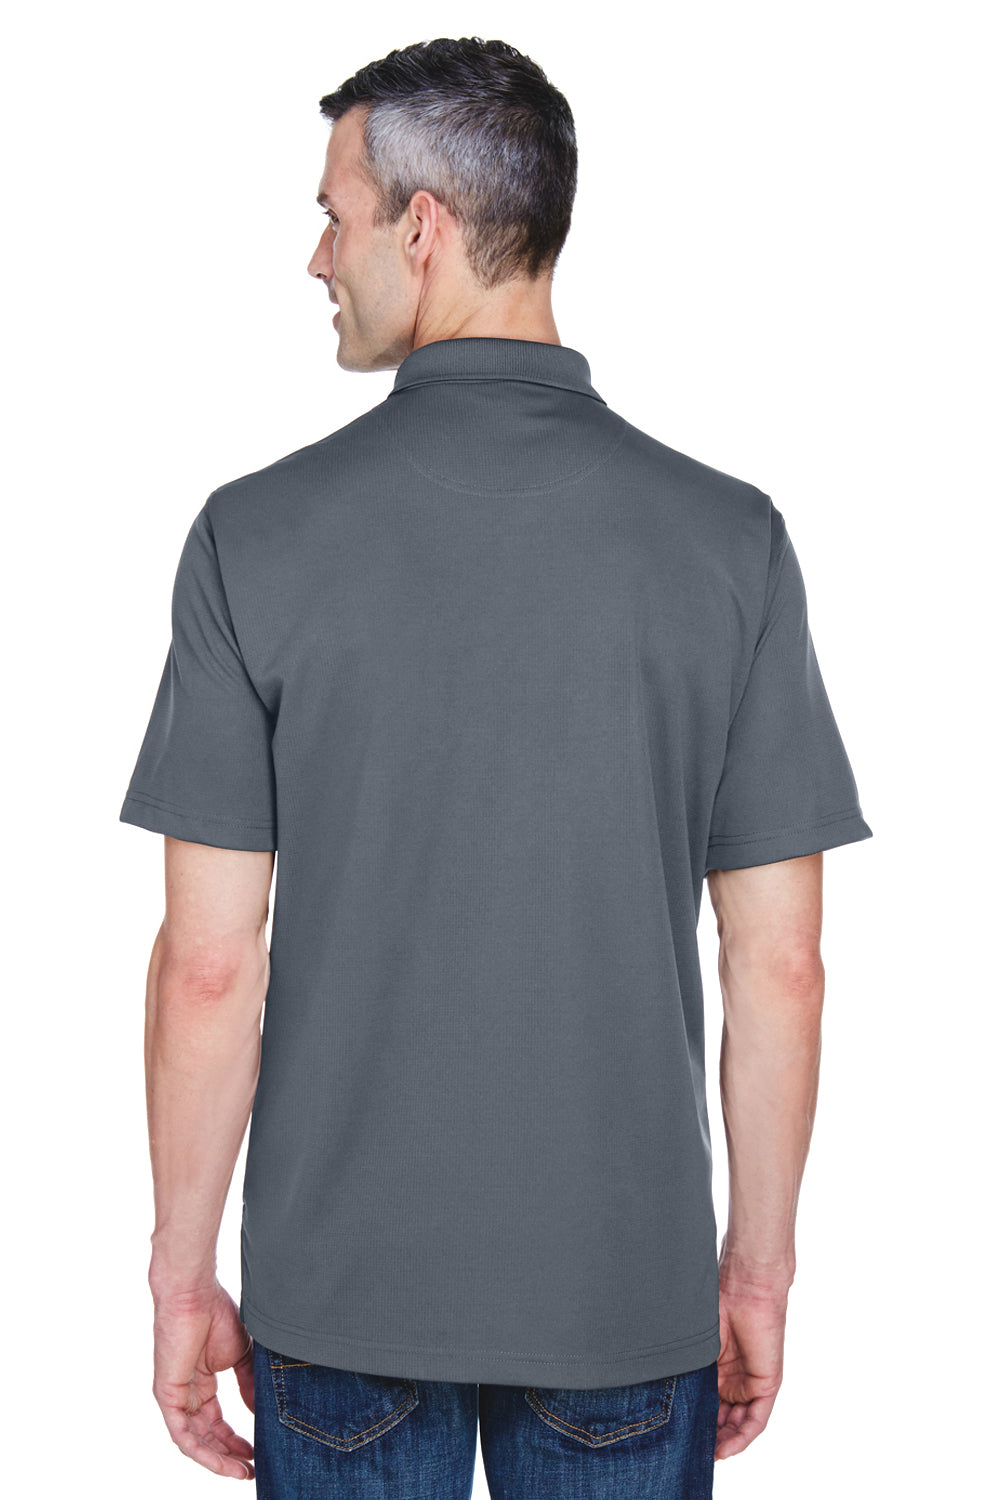 UltraClub 8445 Mens Cool & Dry Performance Moisture Wicking Short Sleeve Polo Shirt Charcoal Grey Back